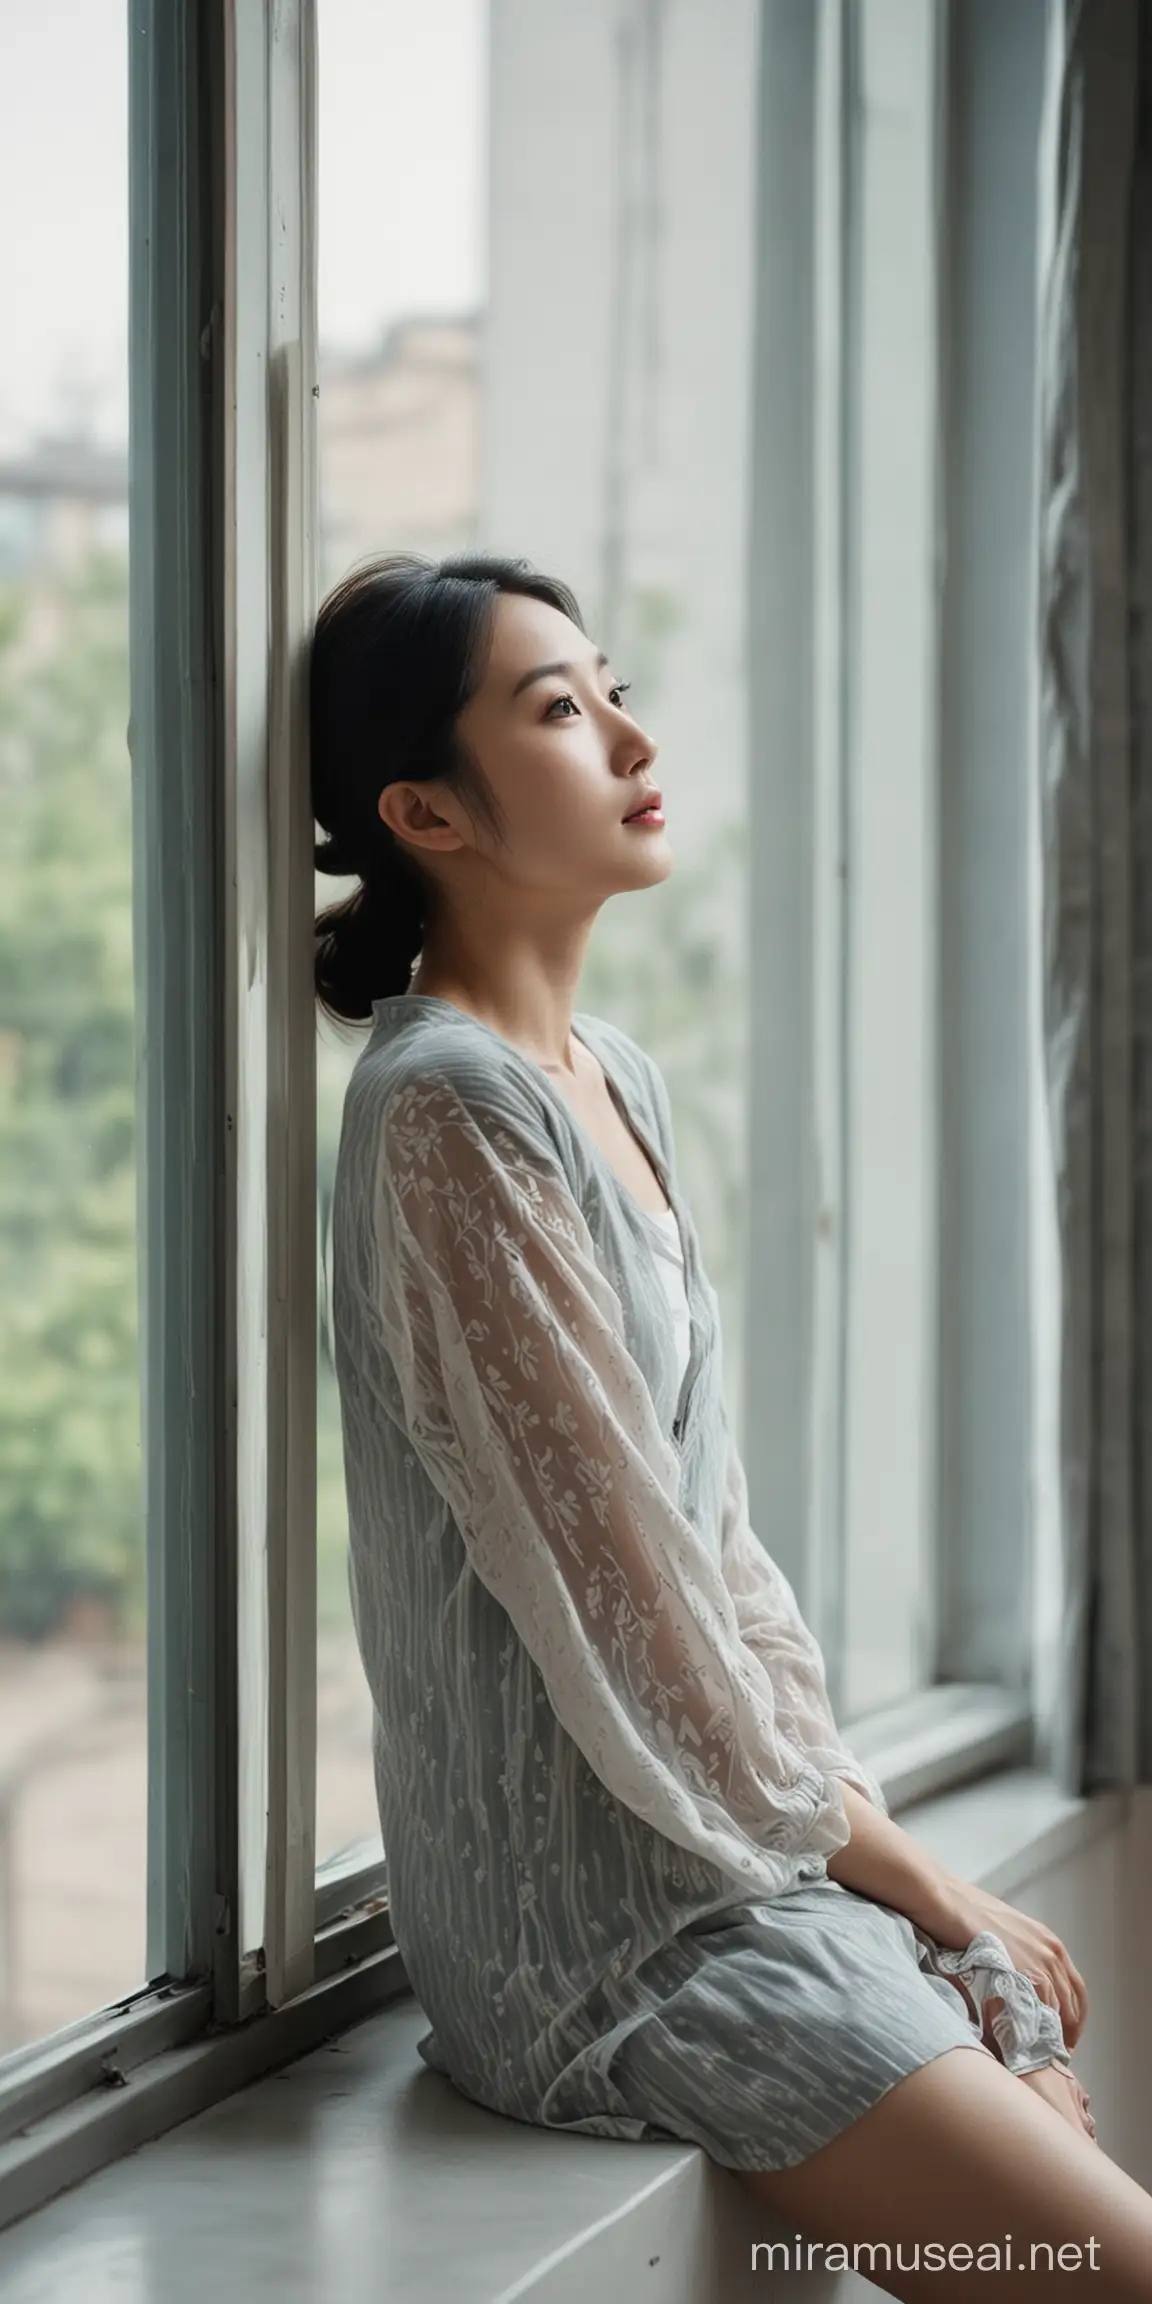 30YearOld Gao Yuanyuan Gazing Out of Window in Contemplative Mood